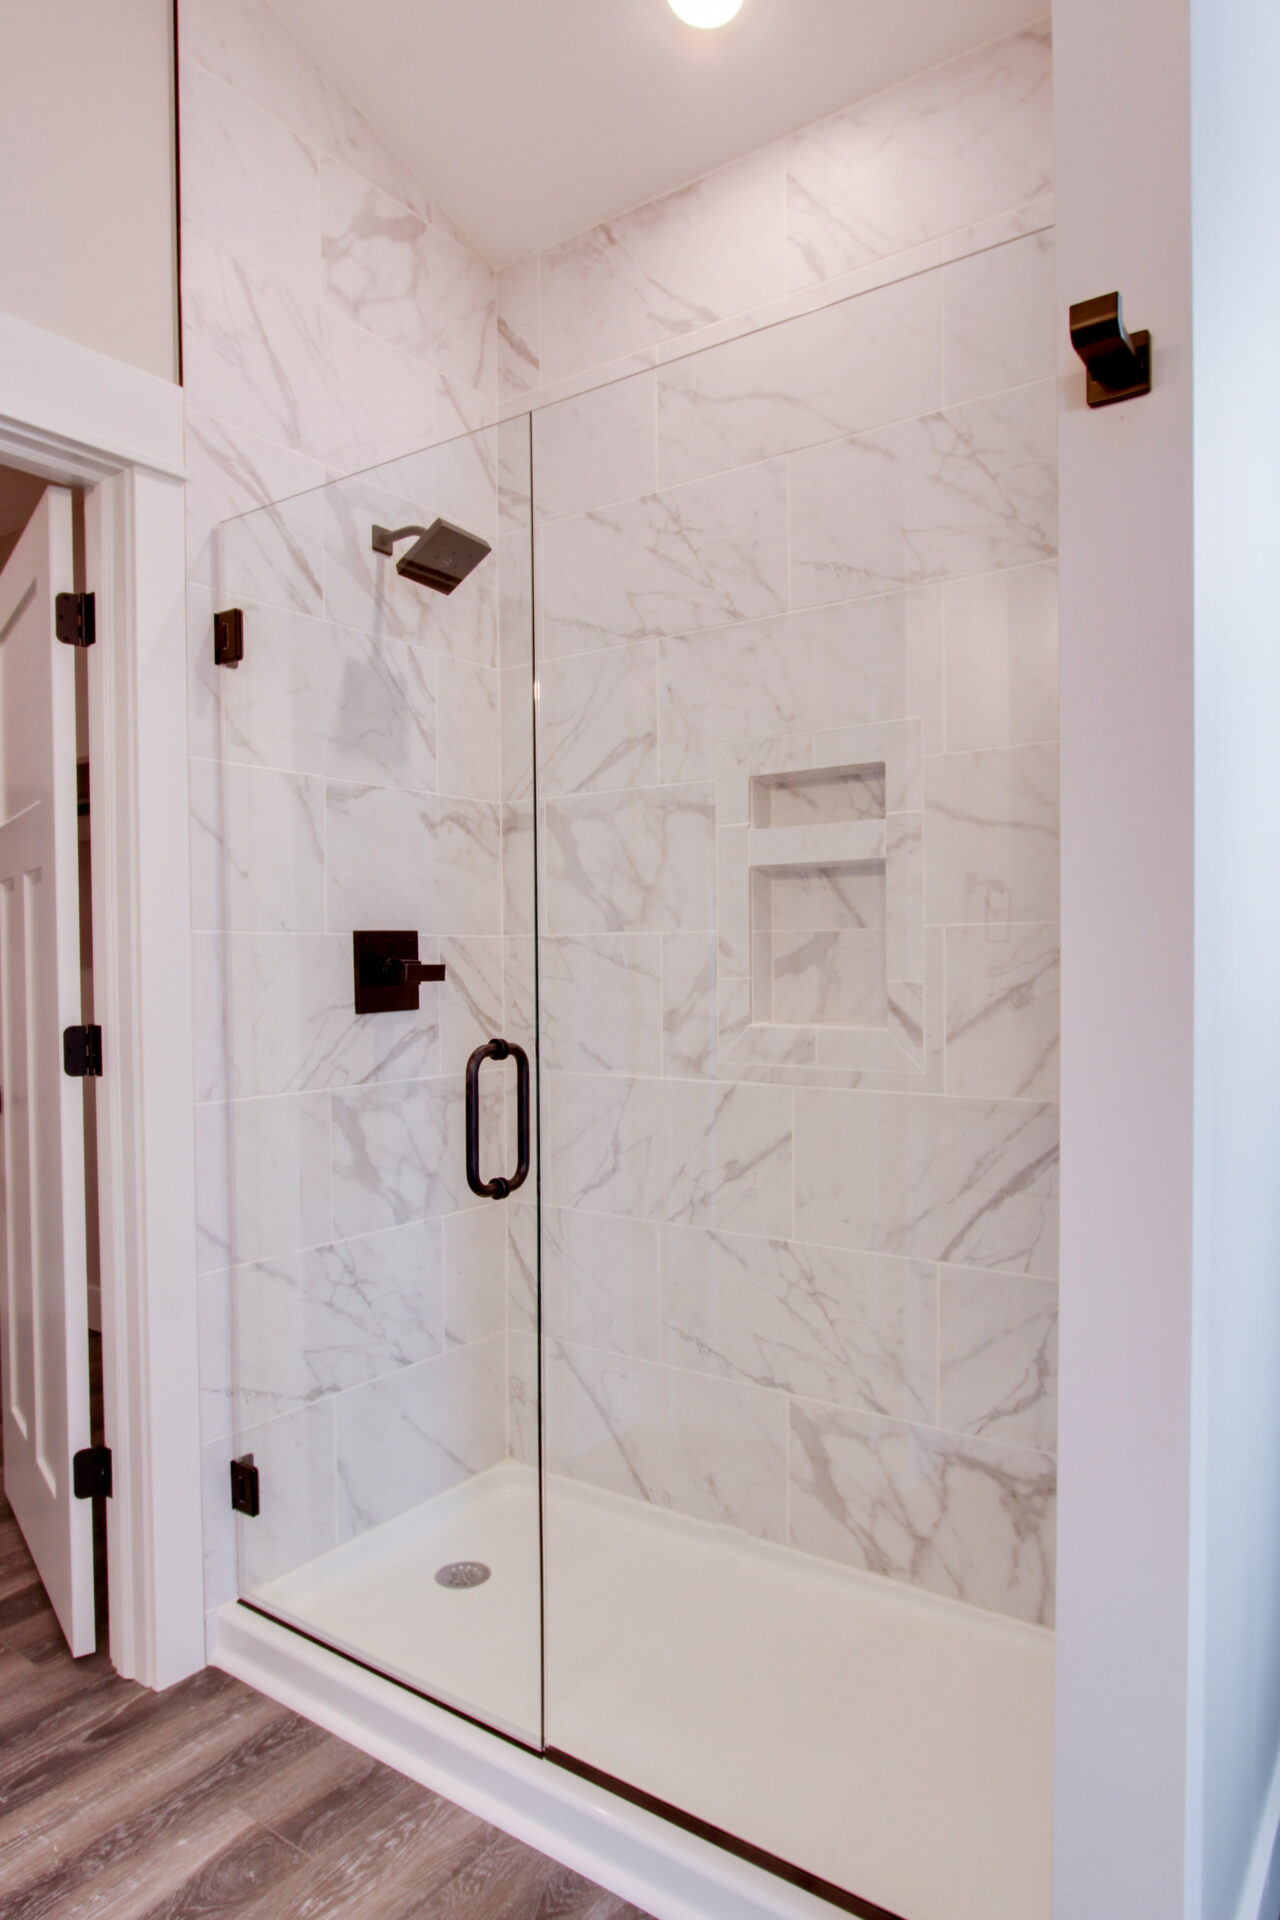 Bathroom interior with shower head and transparent door